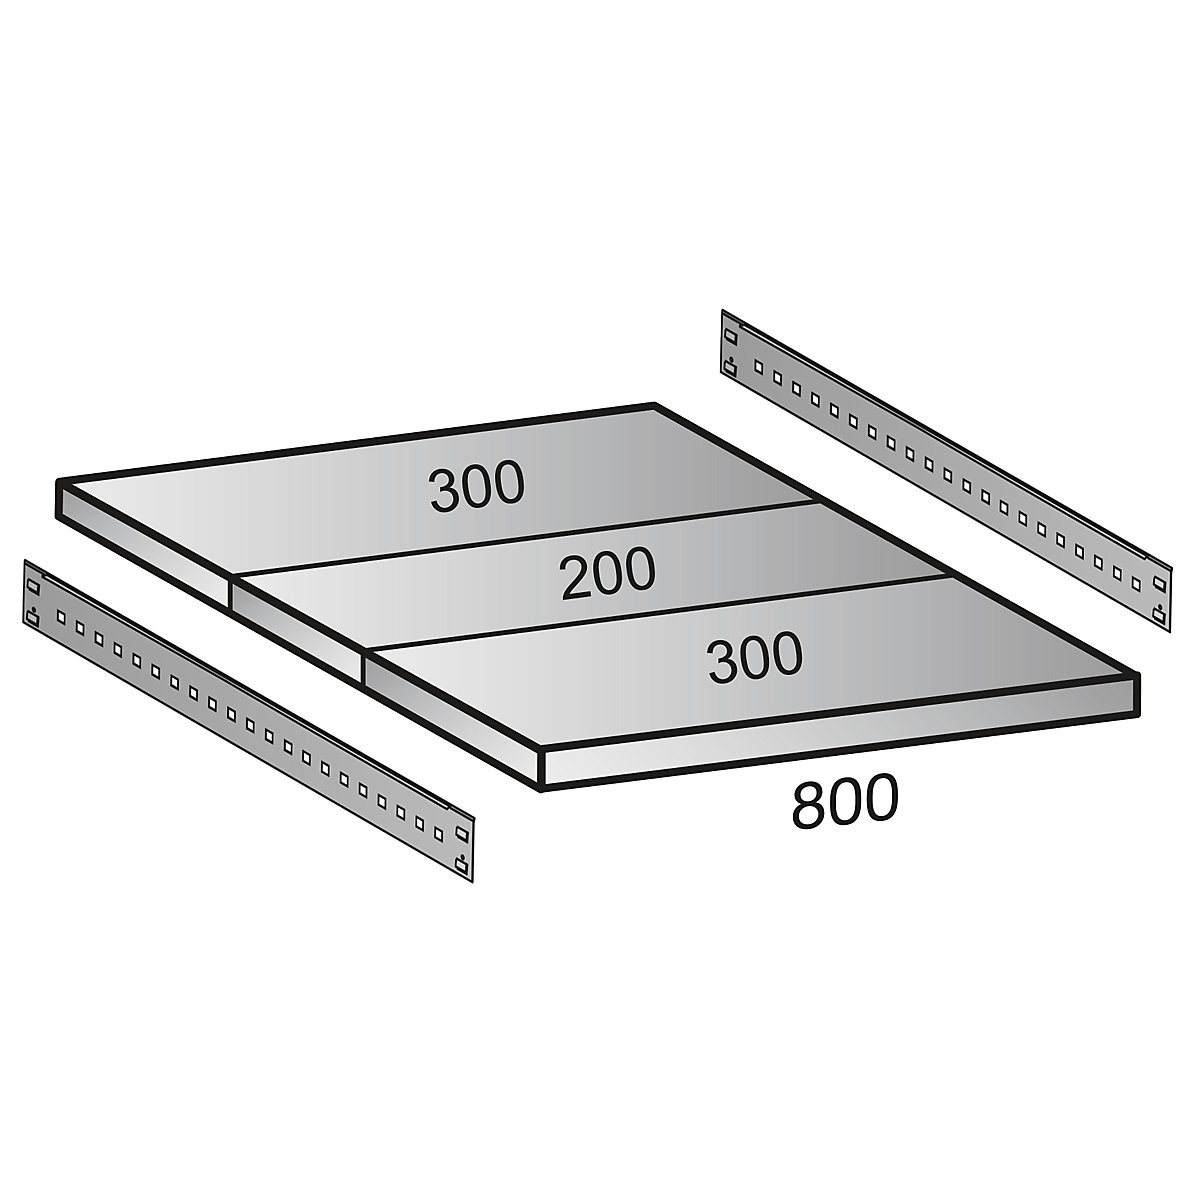 Shelf for CLEANA boltless shelf unit, shelf width 800 mm, depth 800 mm